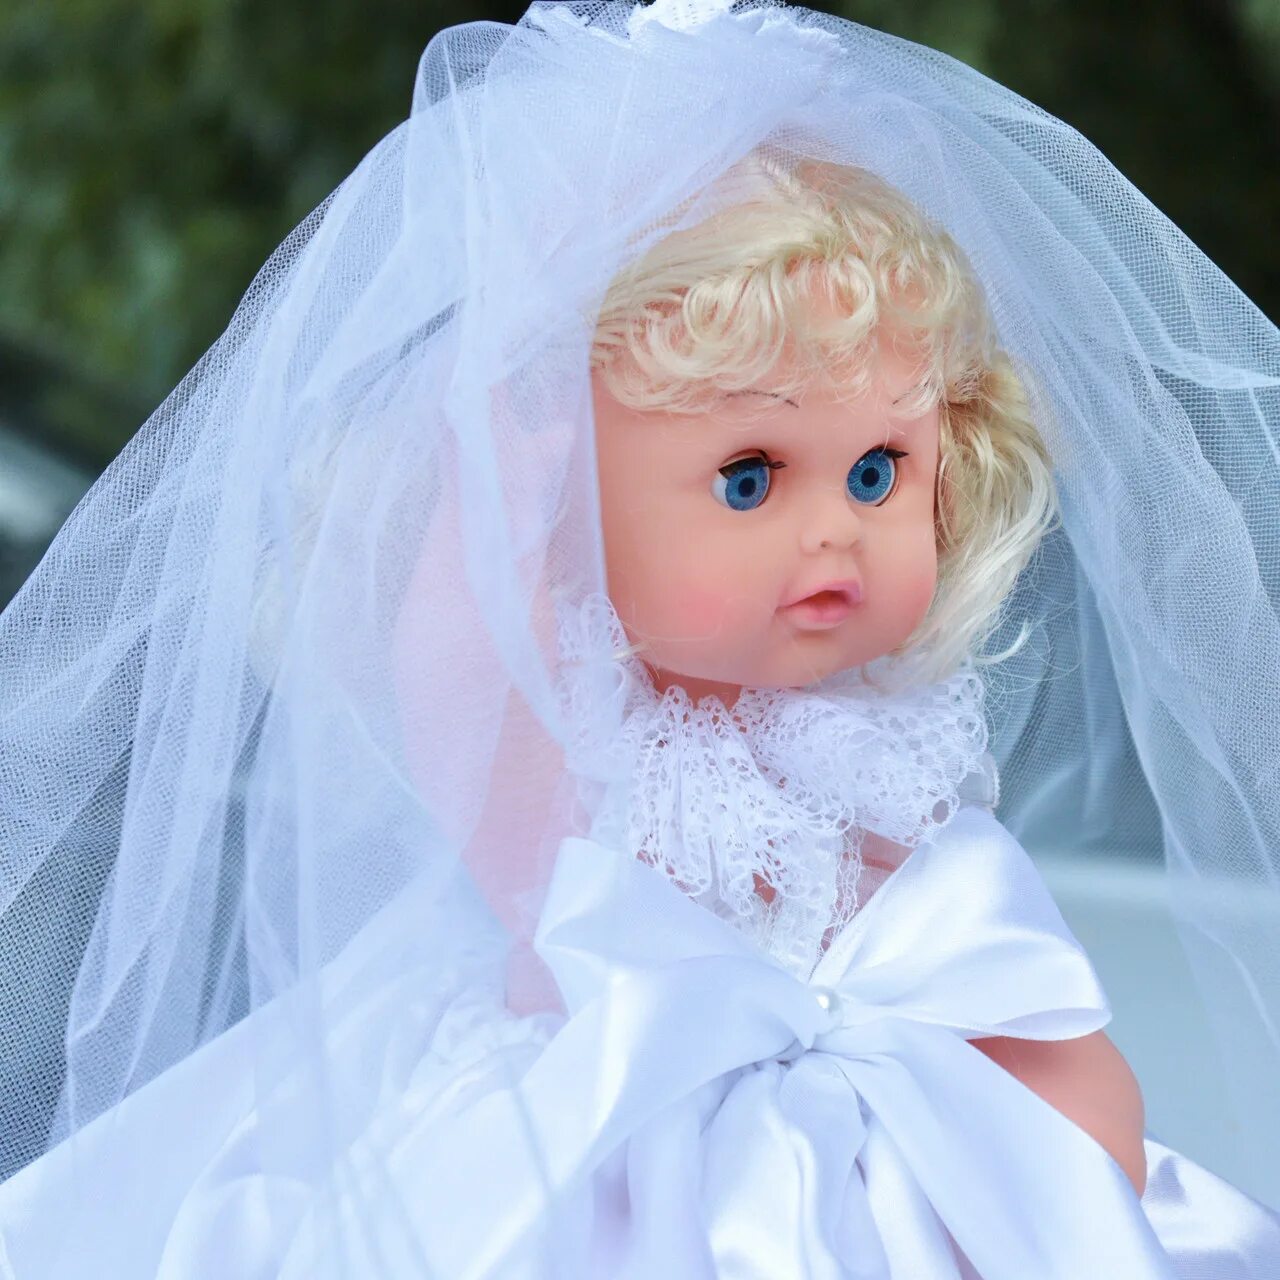 Купить куклу невесту. Свадебные куклы. Кукла невеста на машину. Кукла на свадебной машине. Кукла невеста на свадебную машину.